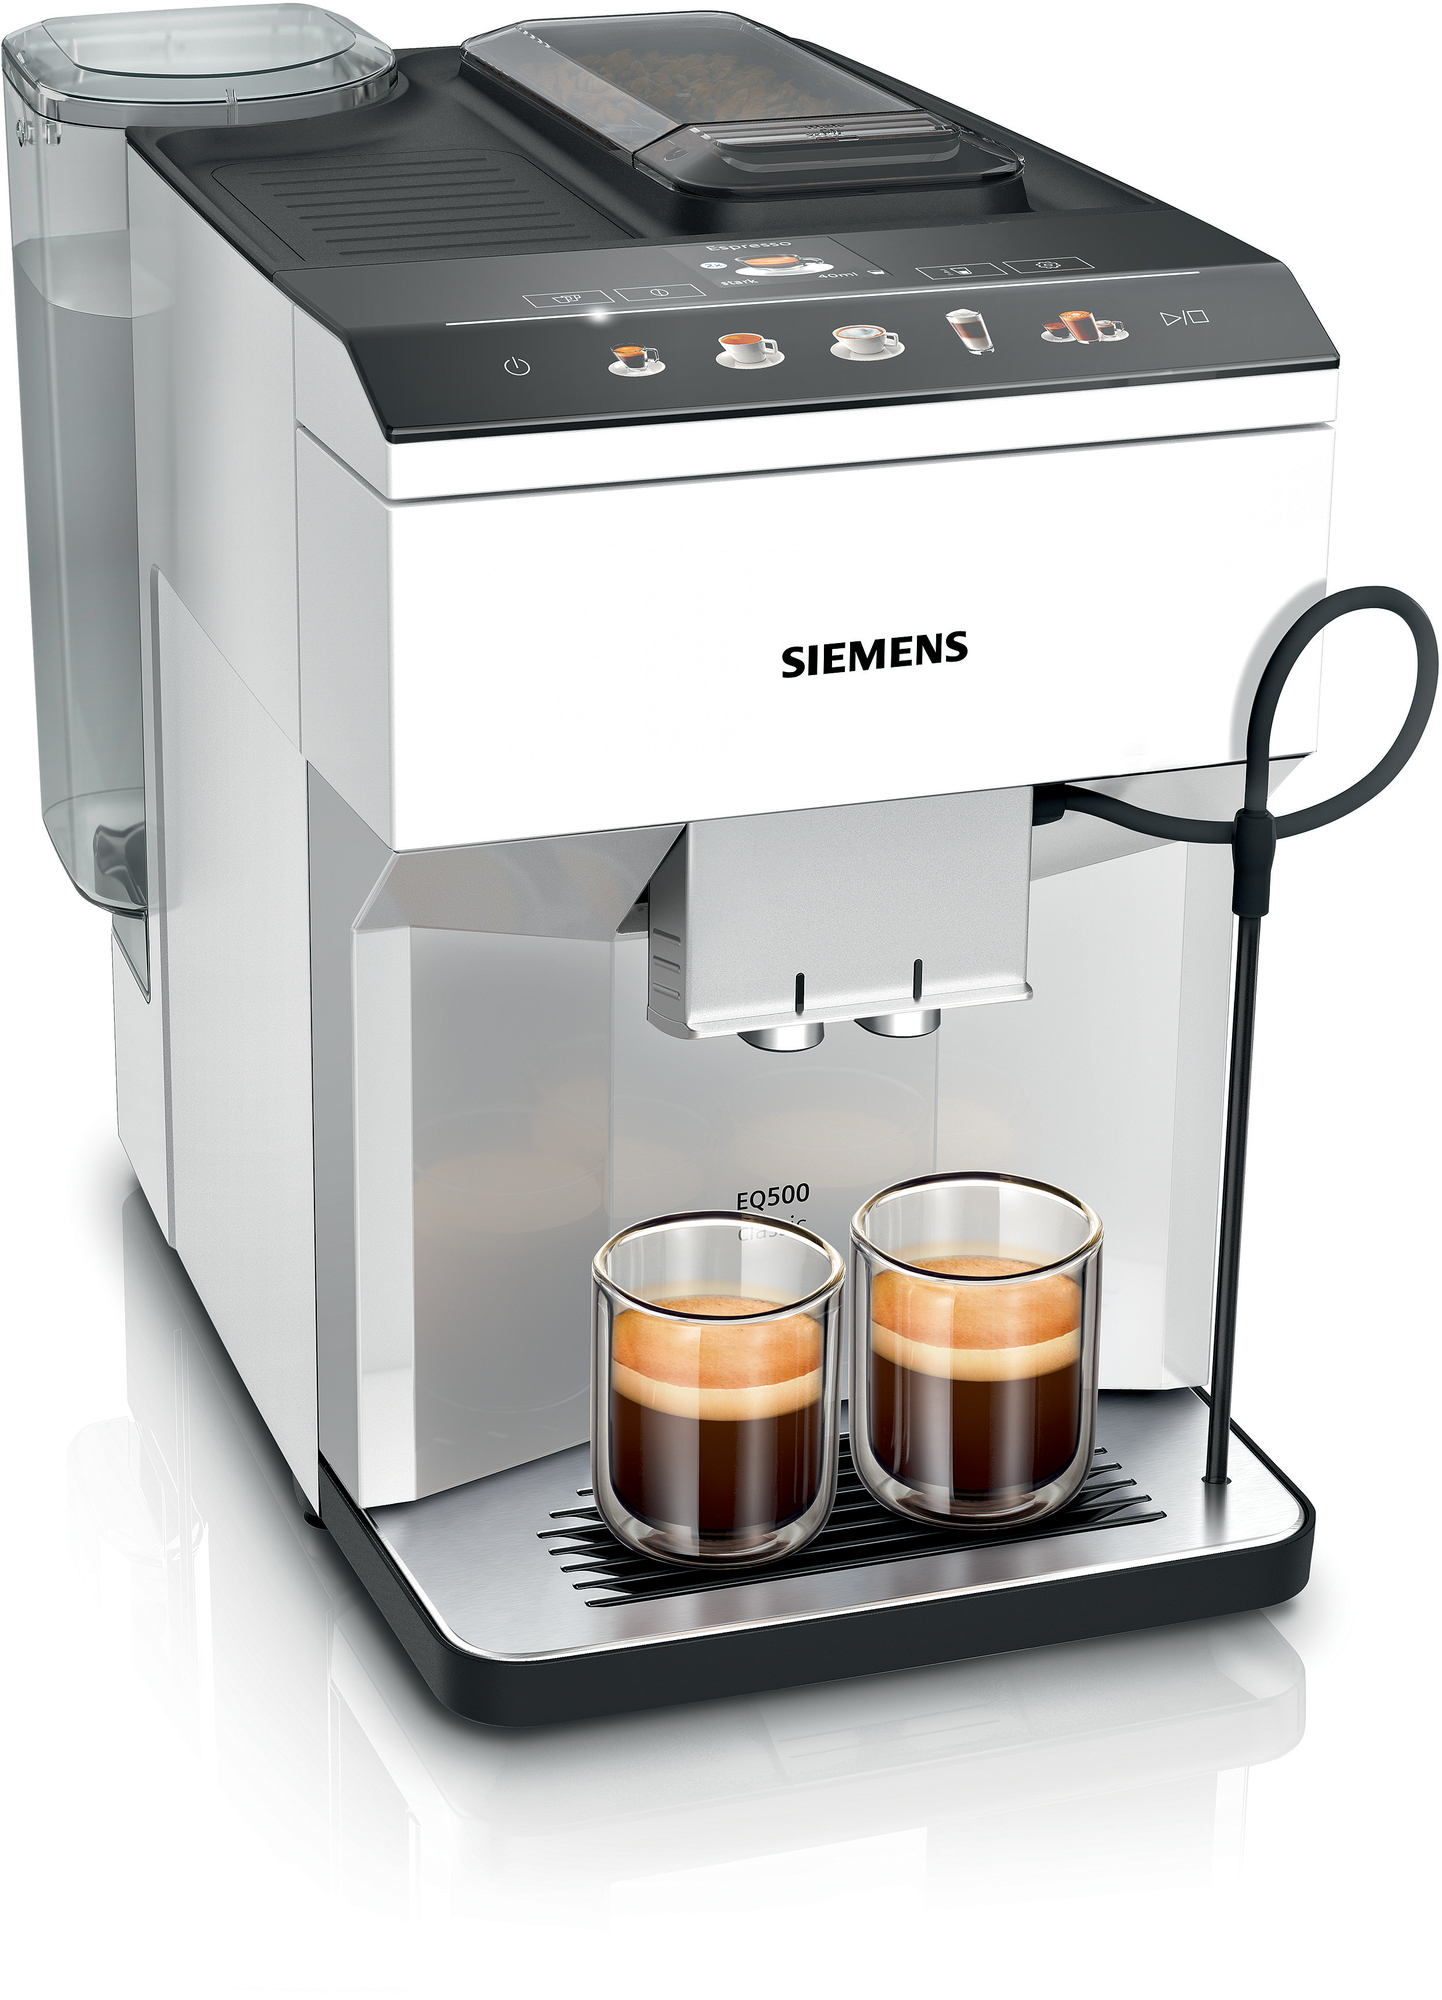 Siemens TP515D02 coffee maker